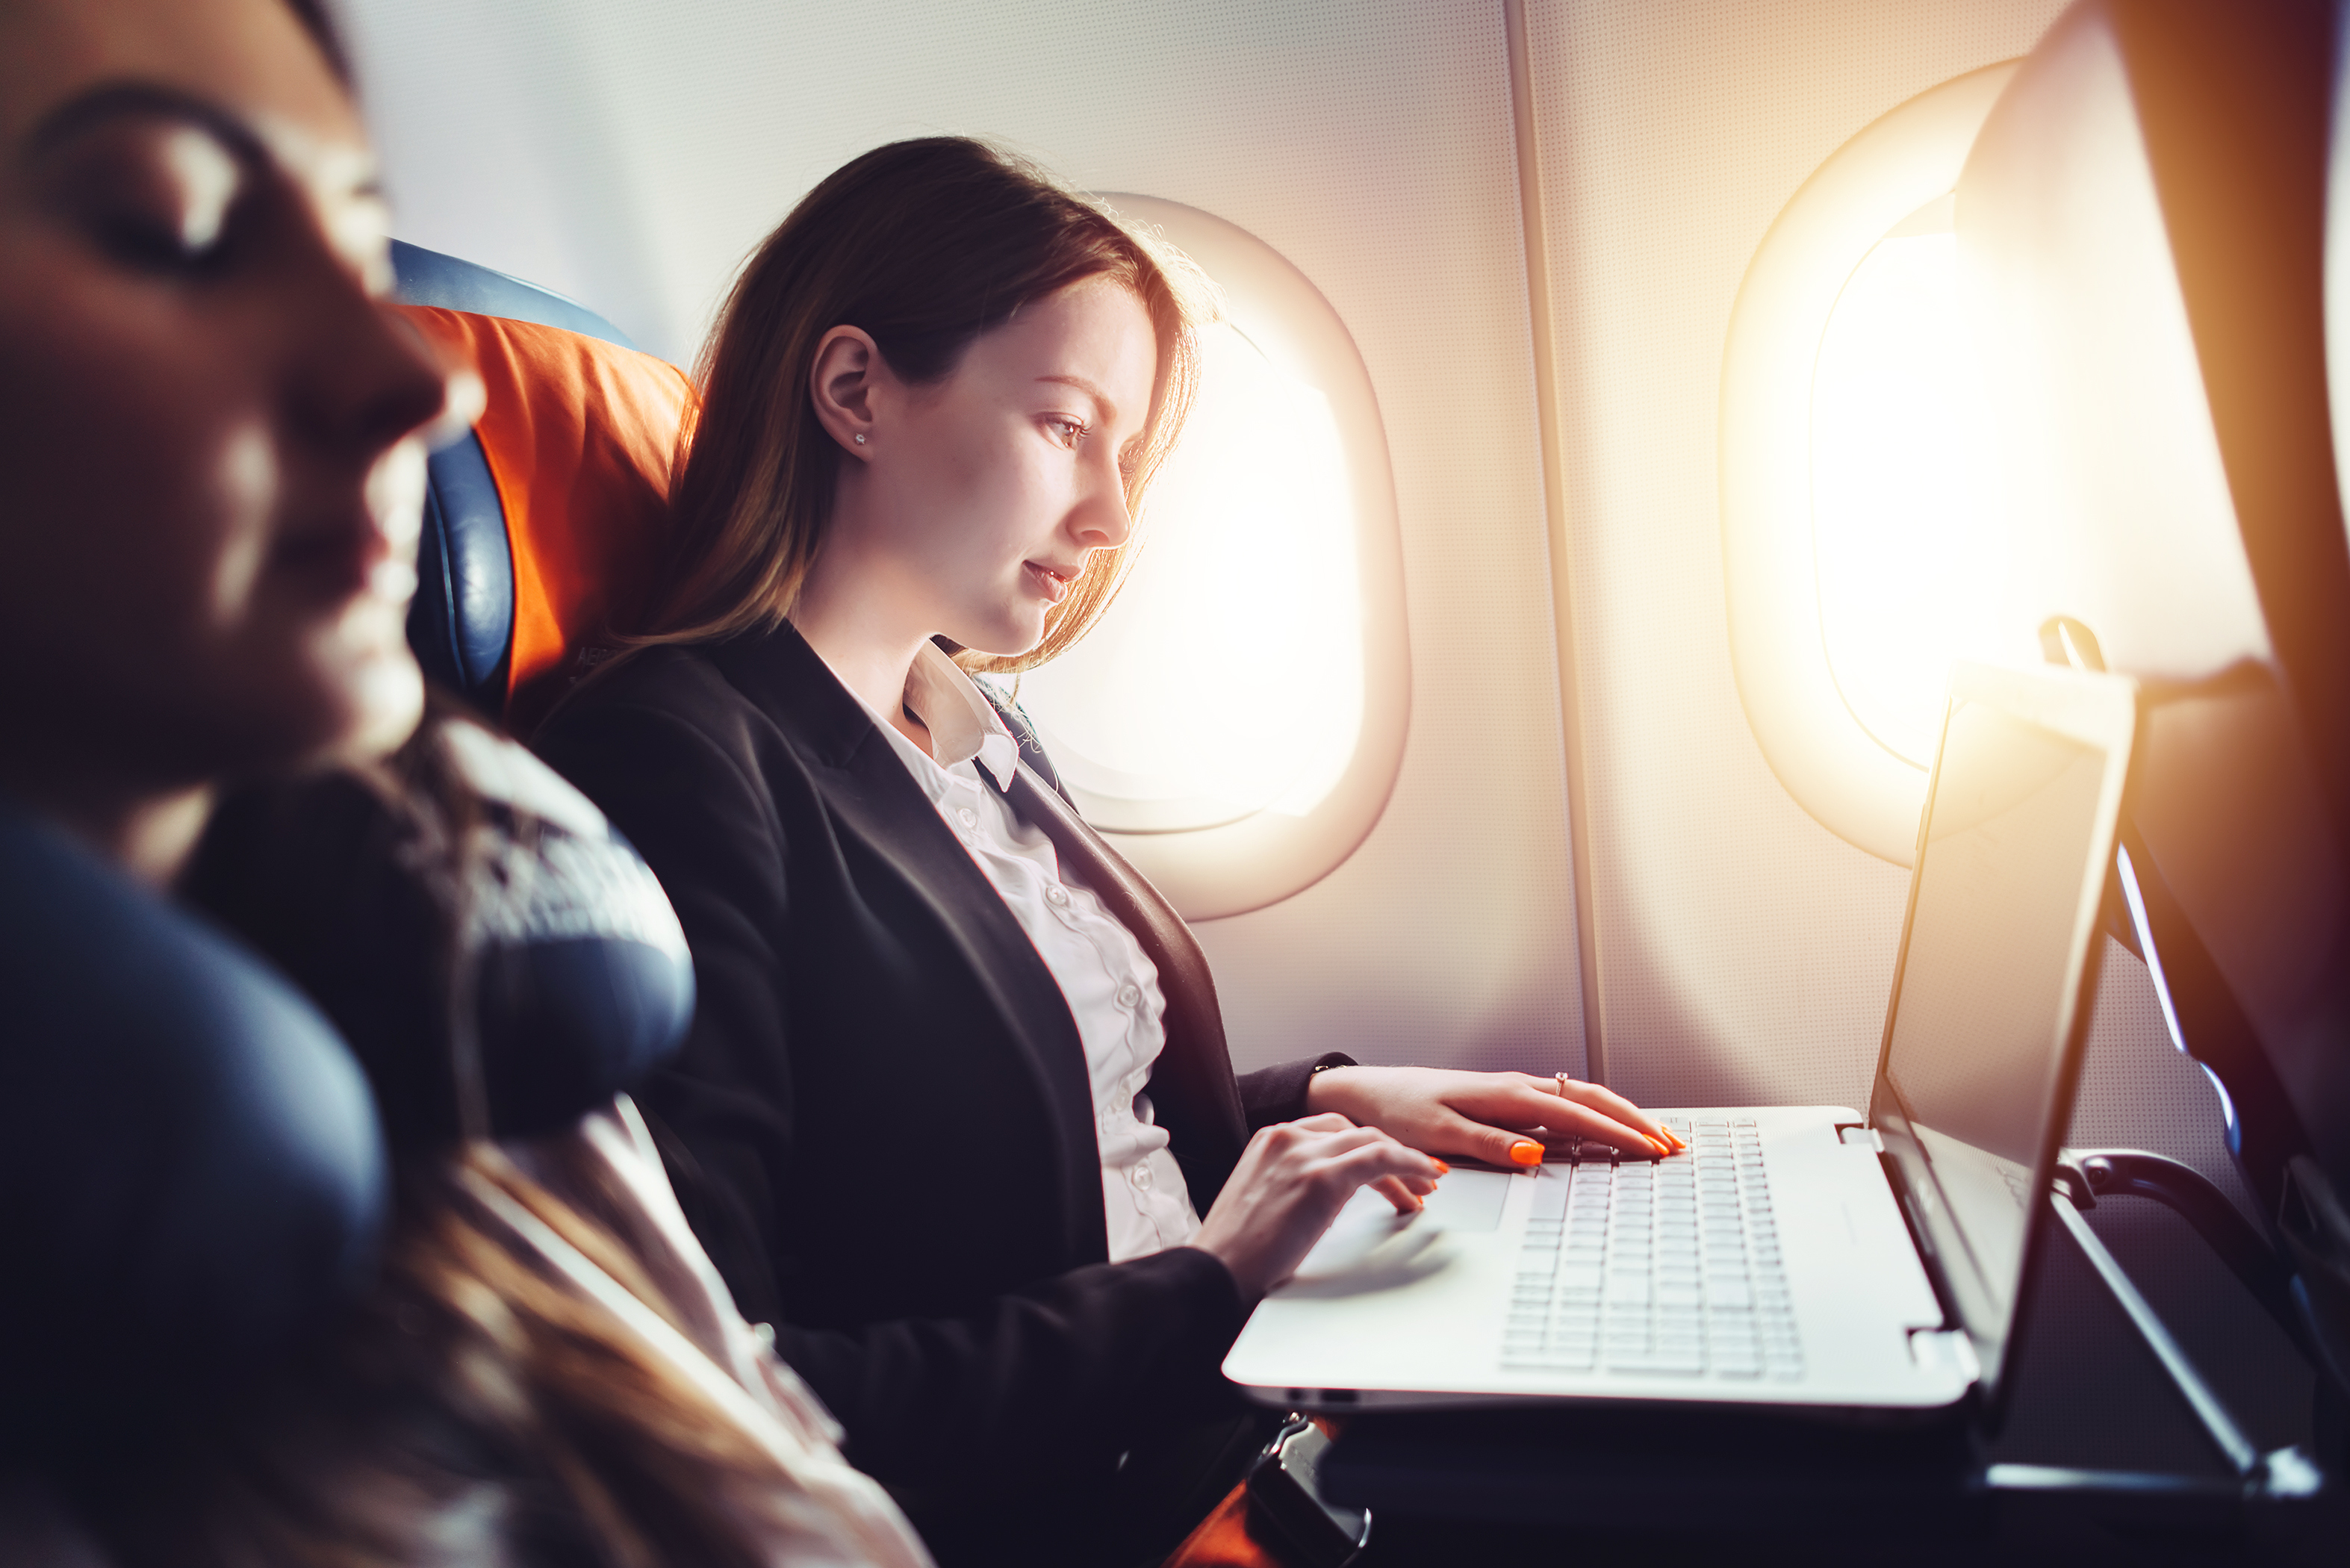 Люди сидят в самолете. Девушка в самолете. Успешная женщина. Девушка с ноутбуком в самолете. Путешествие на самолете.